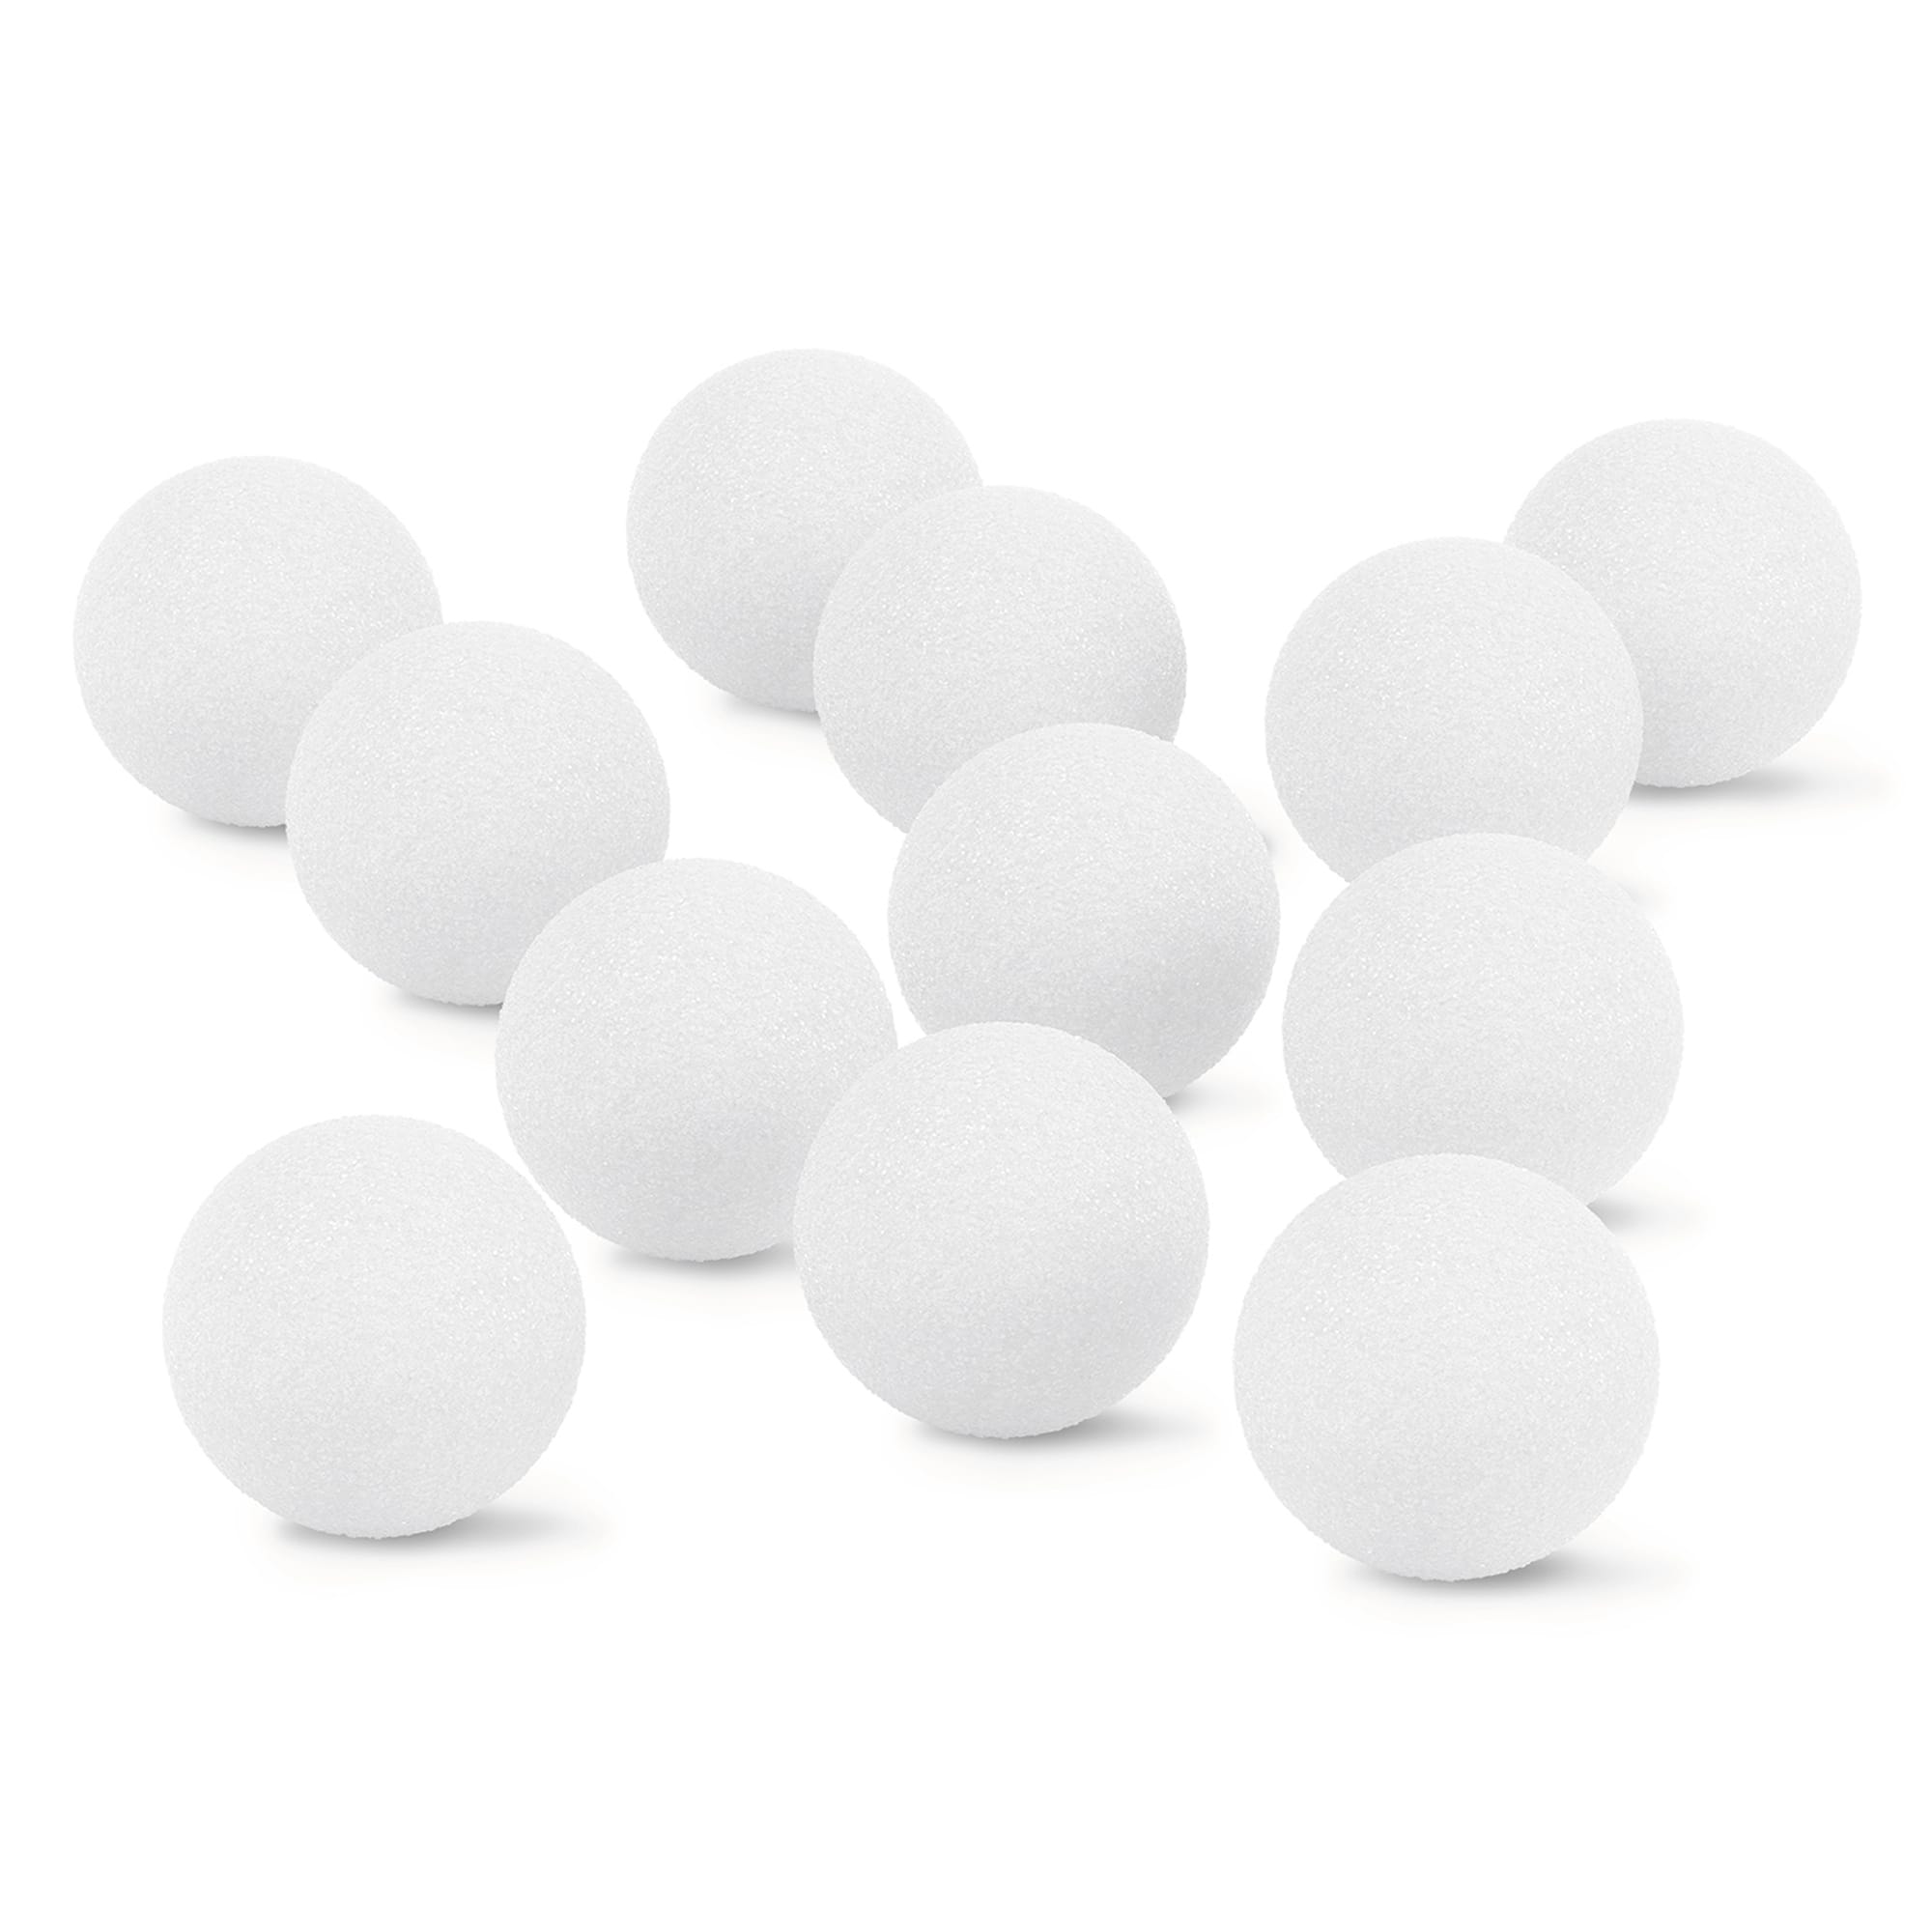 MT Products White Styrofoam Balls / Polystyrene Foam Balls - MT